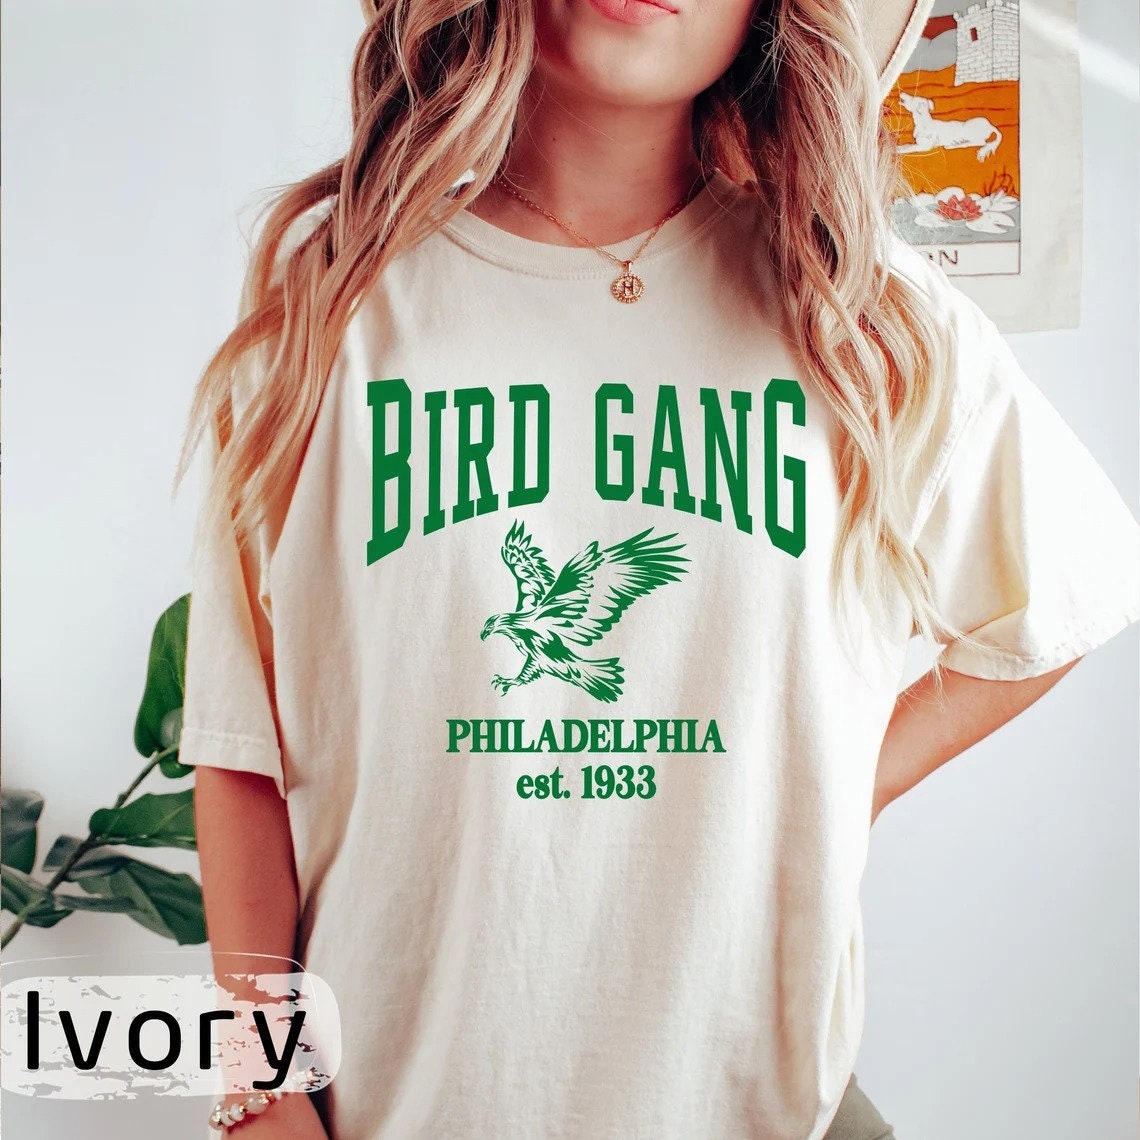 Discover Bird Gang Philadelphia Est. 1933 Shirt, Philadelphia Football TShirt, Vintage Style Philadelphia Football